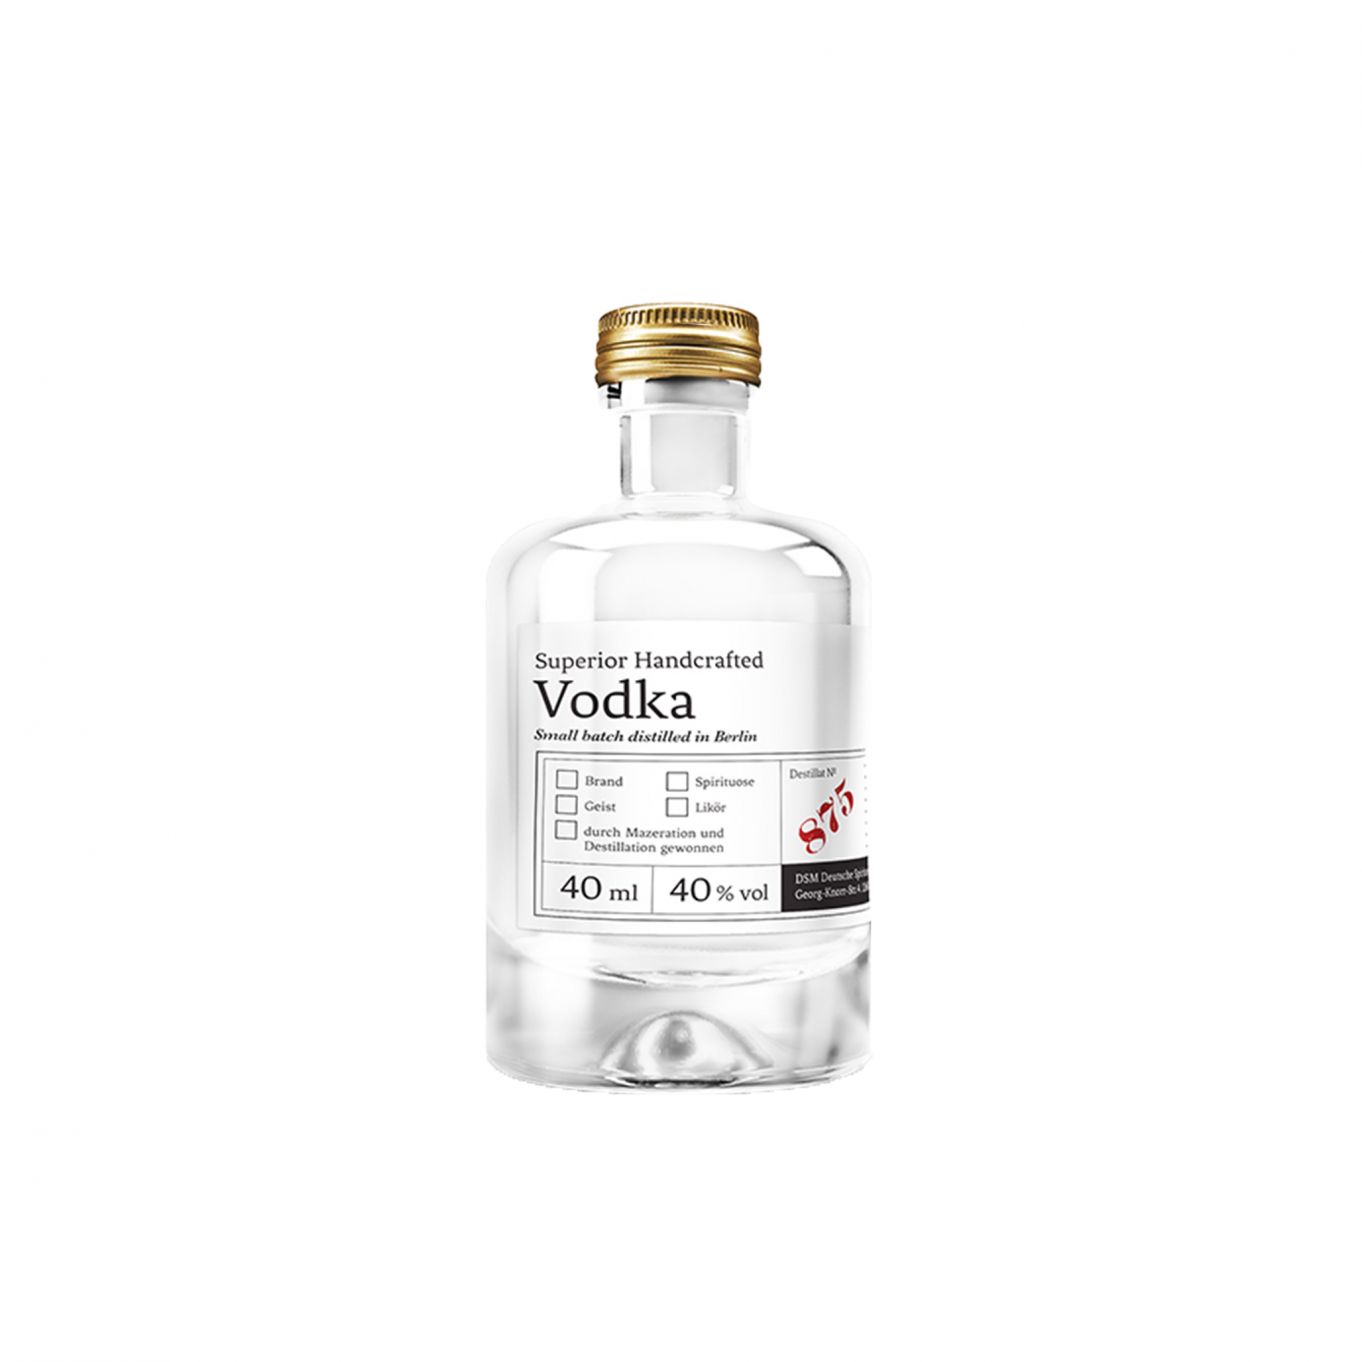 Superior Handcrafted Vodka